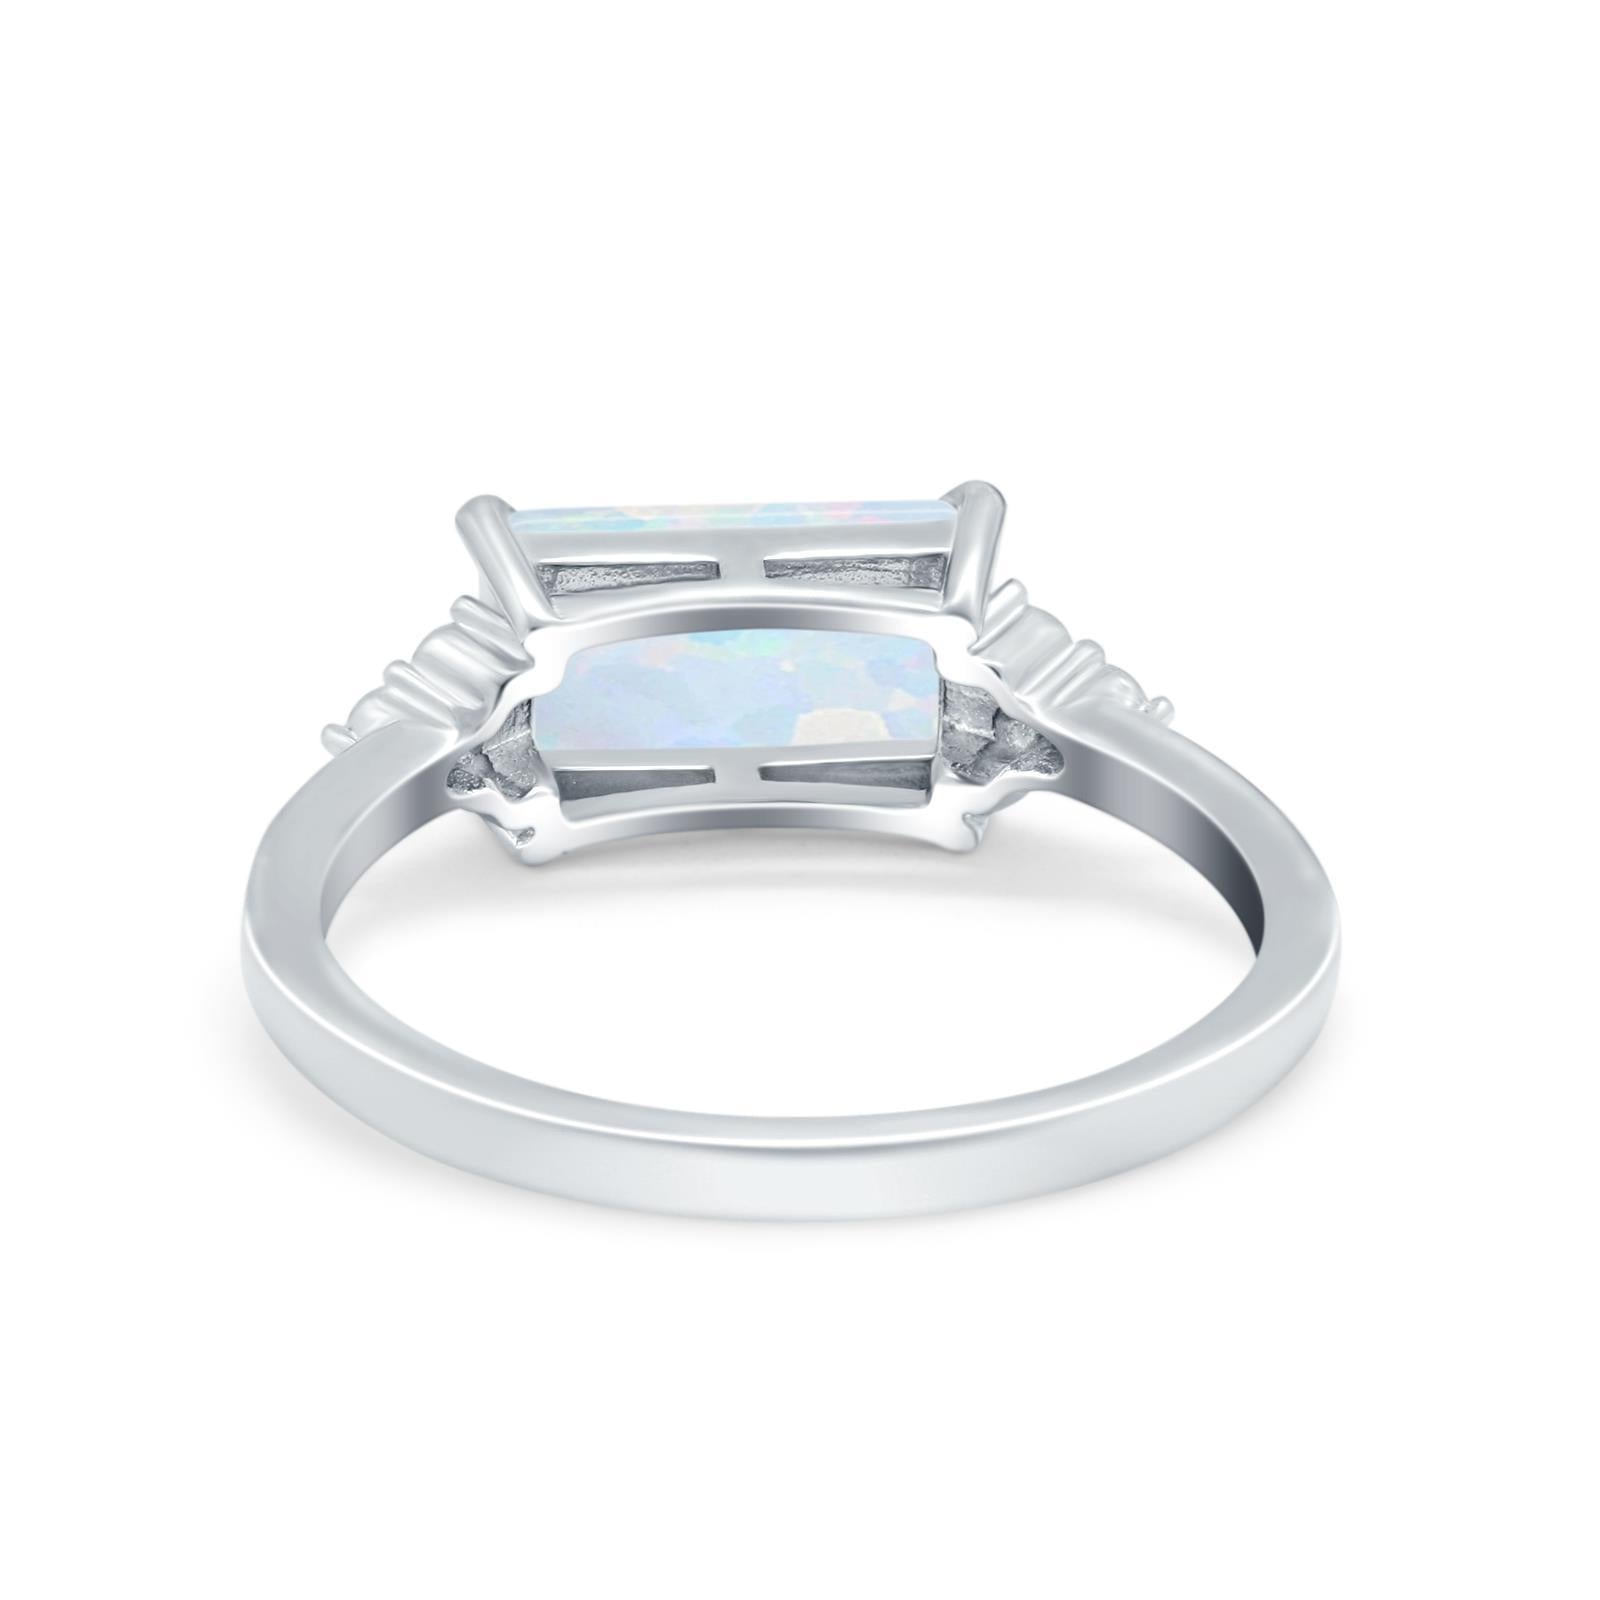 Sideways Fashion Ring Dainty Simulated Cubic Zirconia 925 Sterling Silver